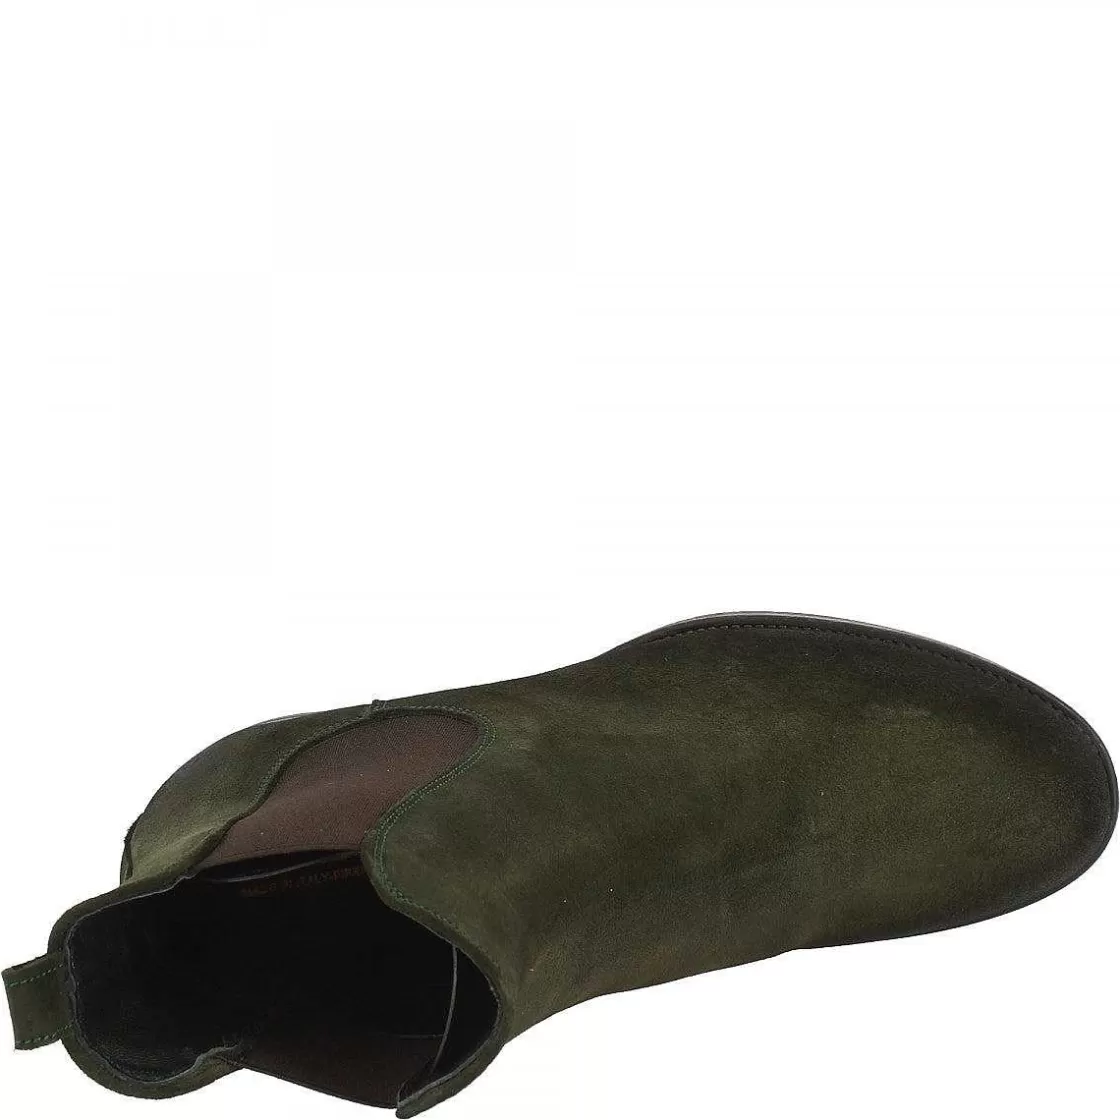 Leonardo Women'S Handmade Heels Ankle Boots In Green Suede Leather Discount